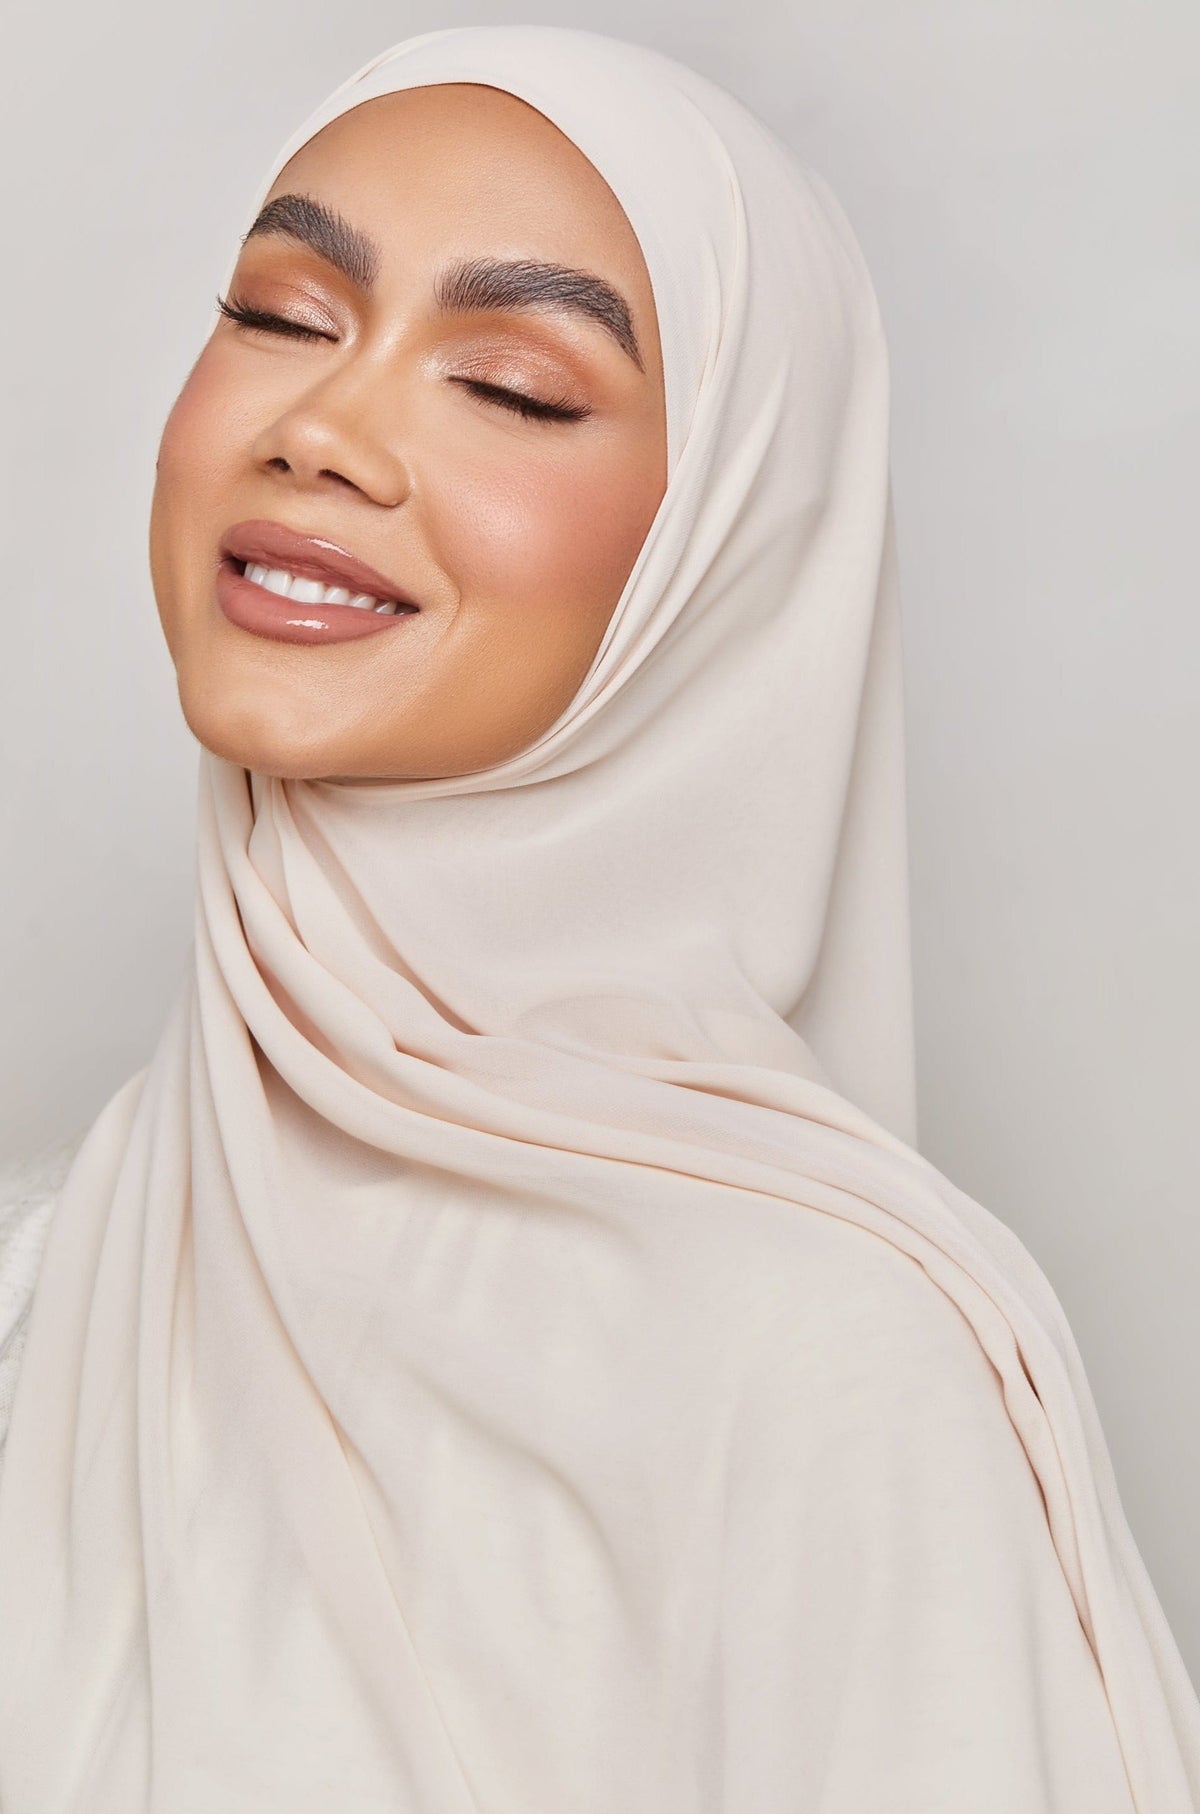 Chiffon LITE Hijab - Almond Peach epschoolboard 